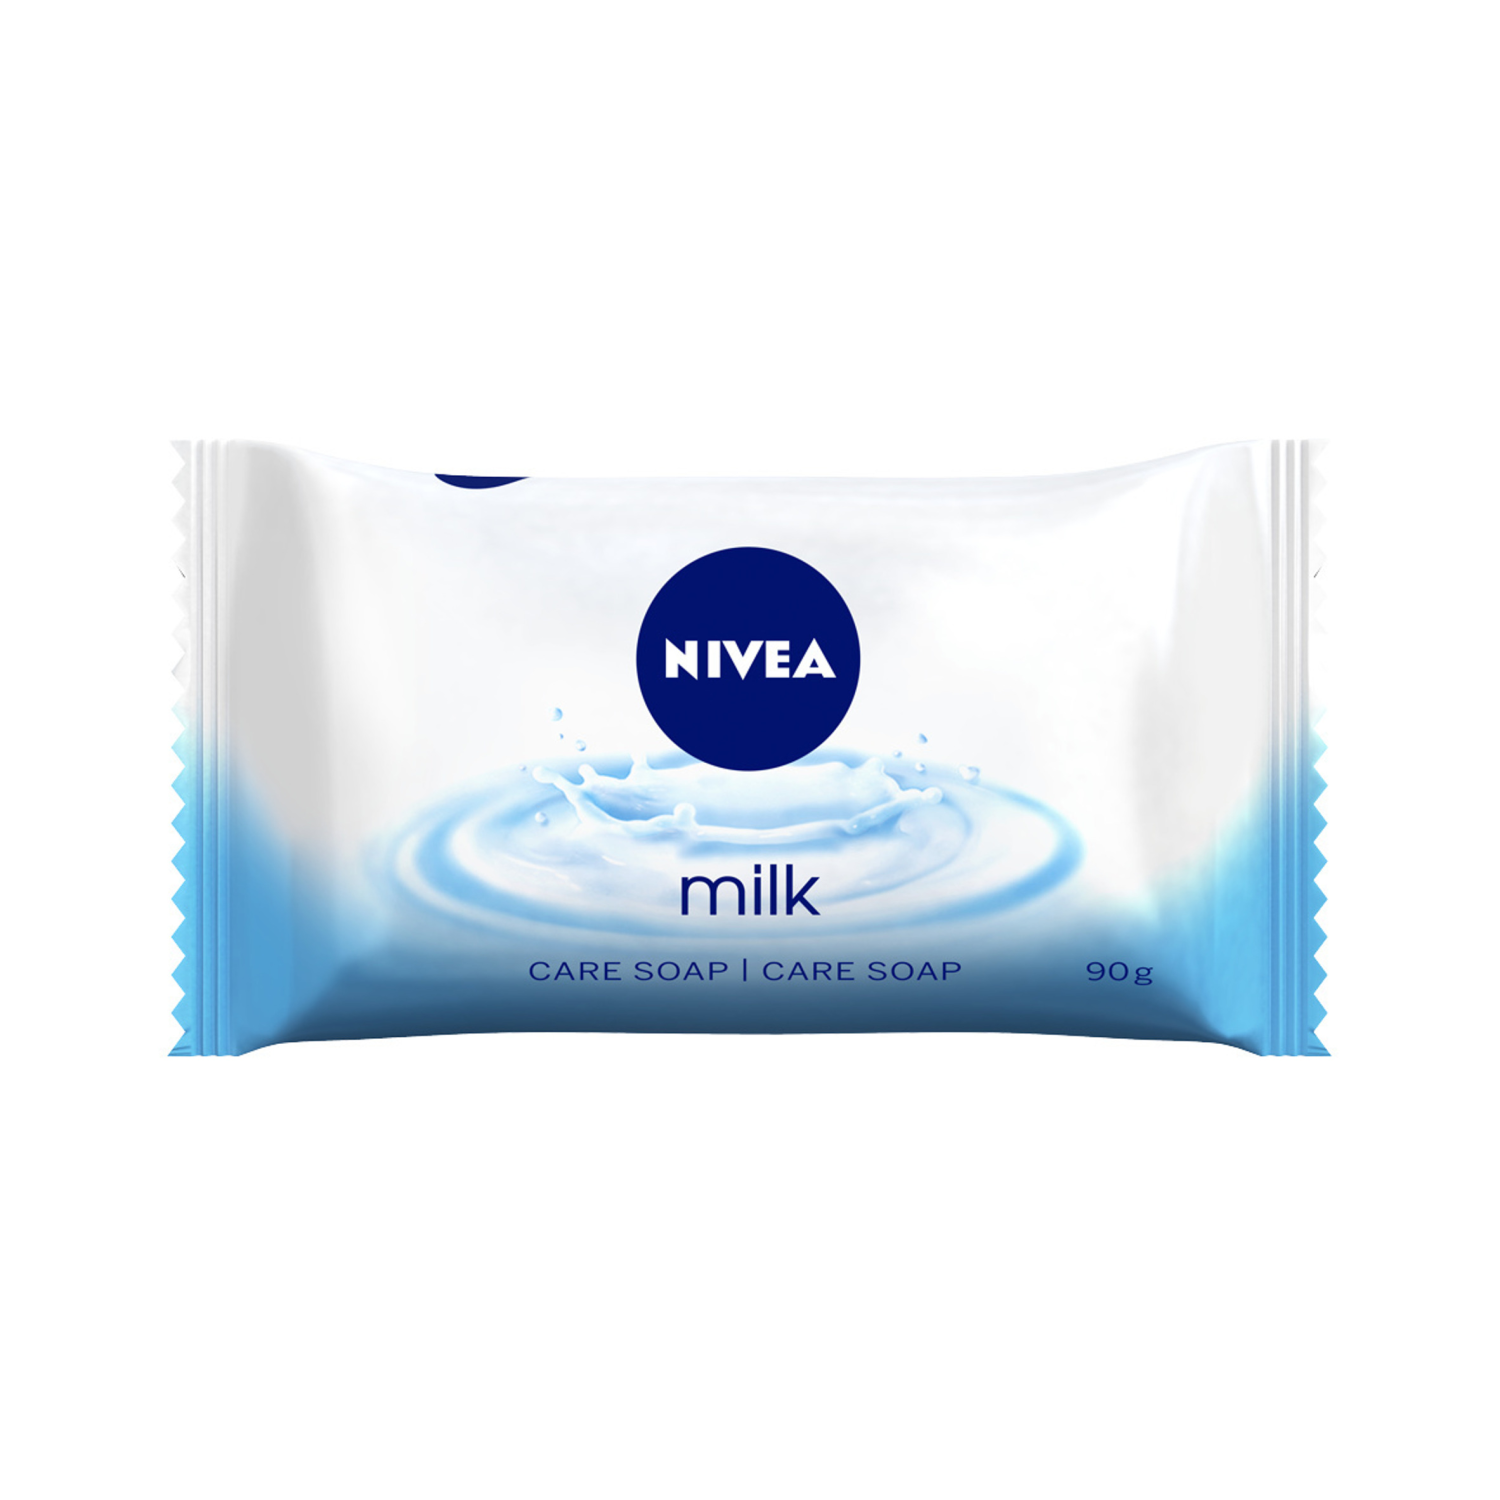 Nivea Milk ухаживающее твердое мыло, 90 г nivea milk